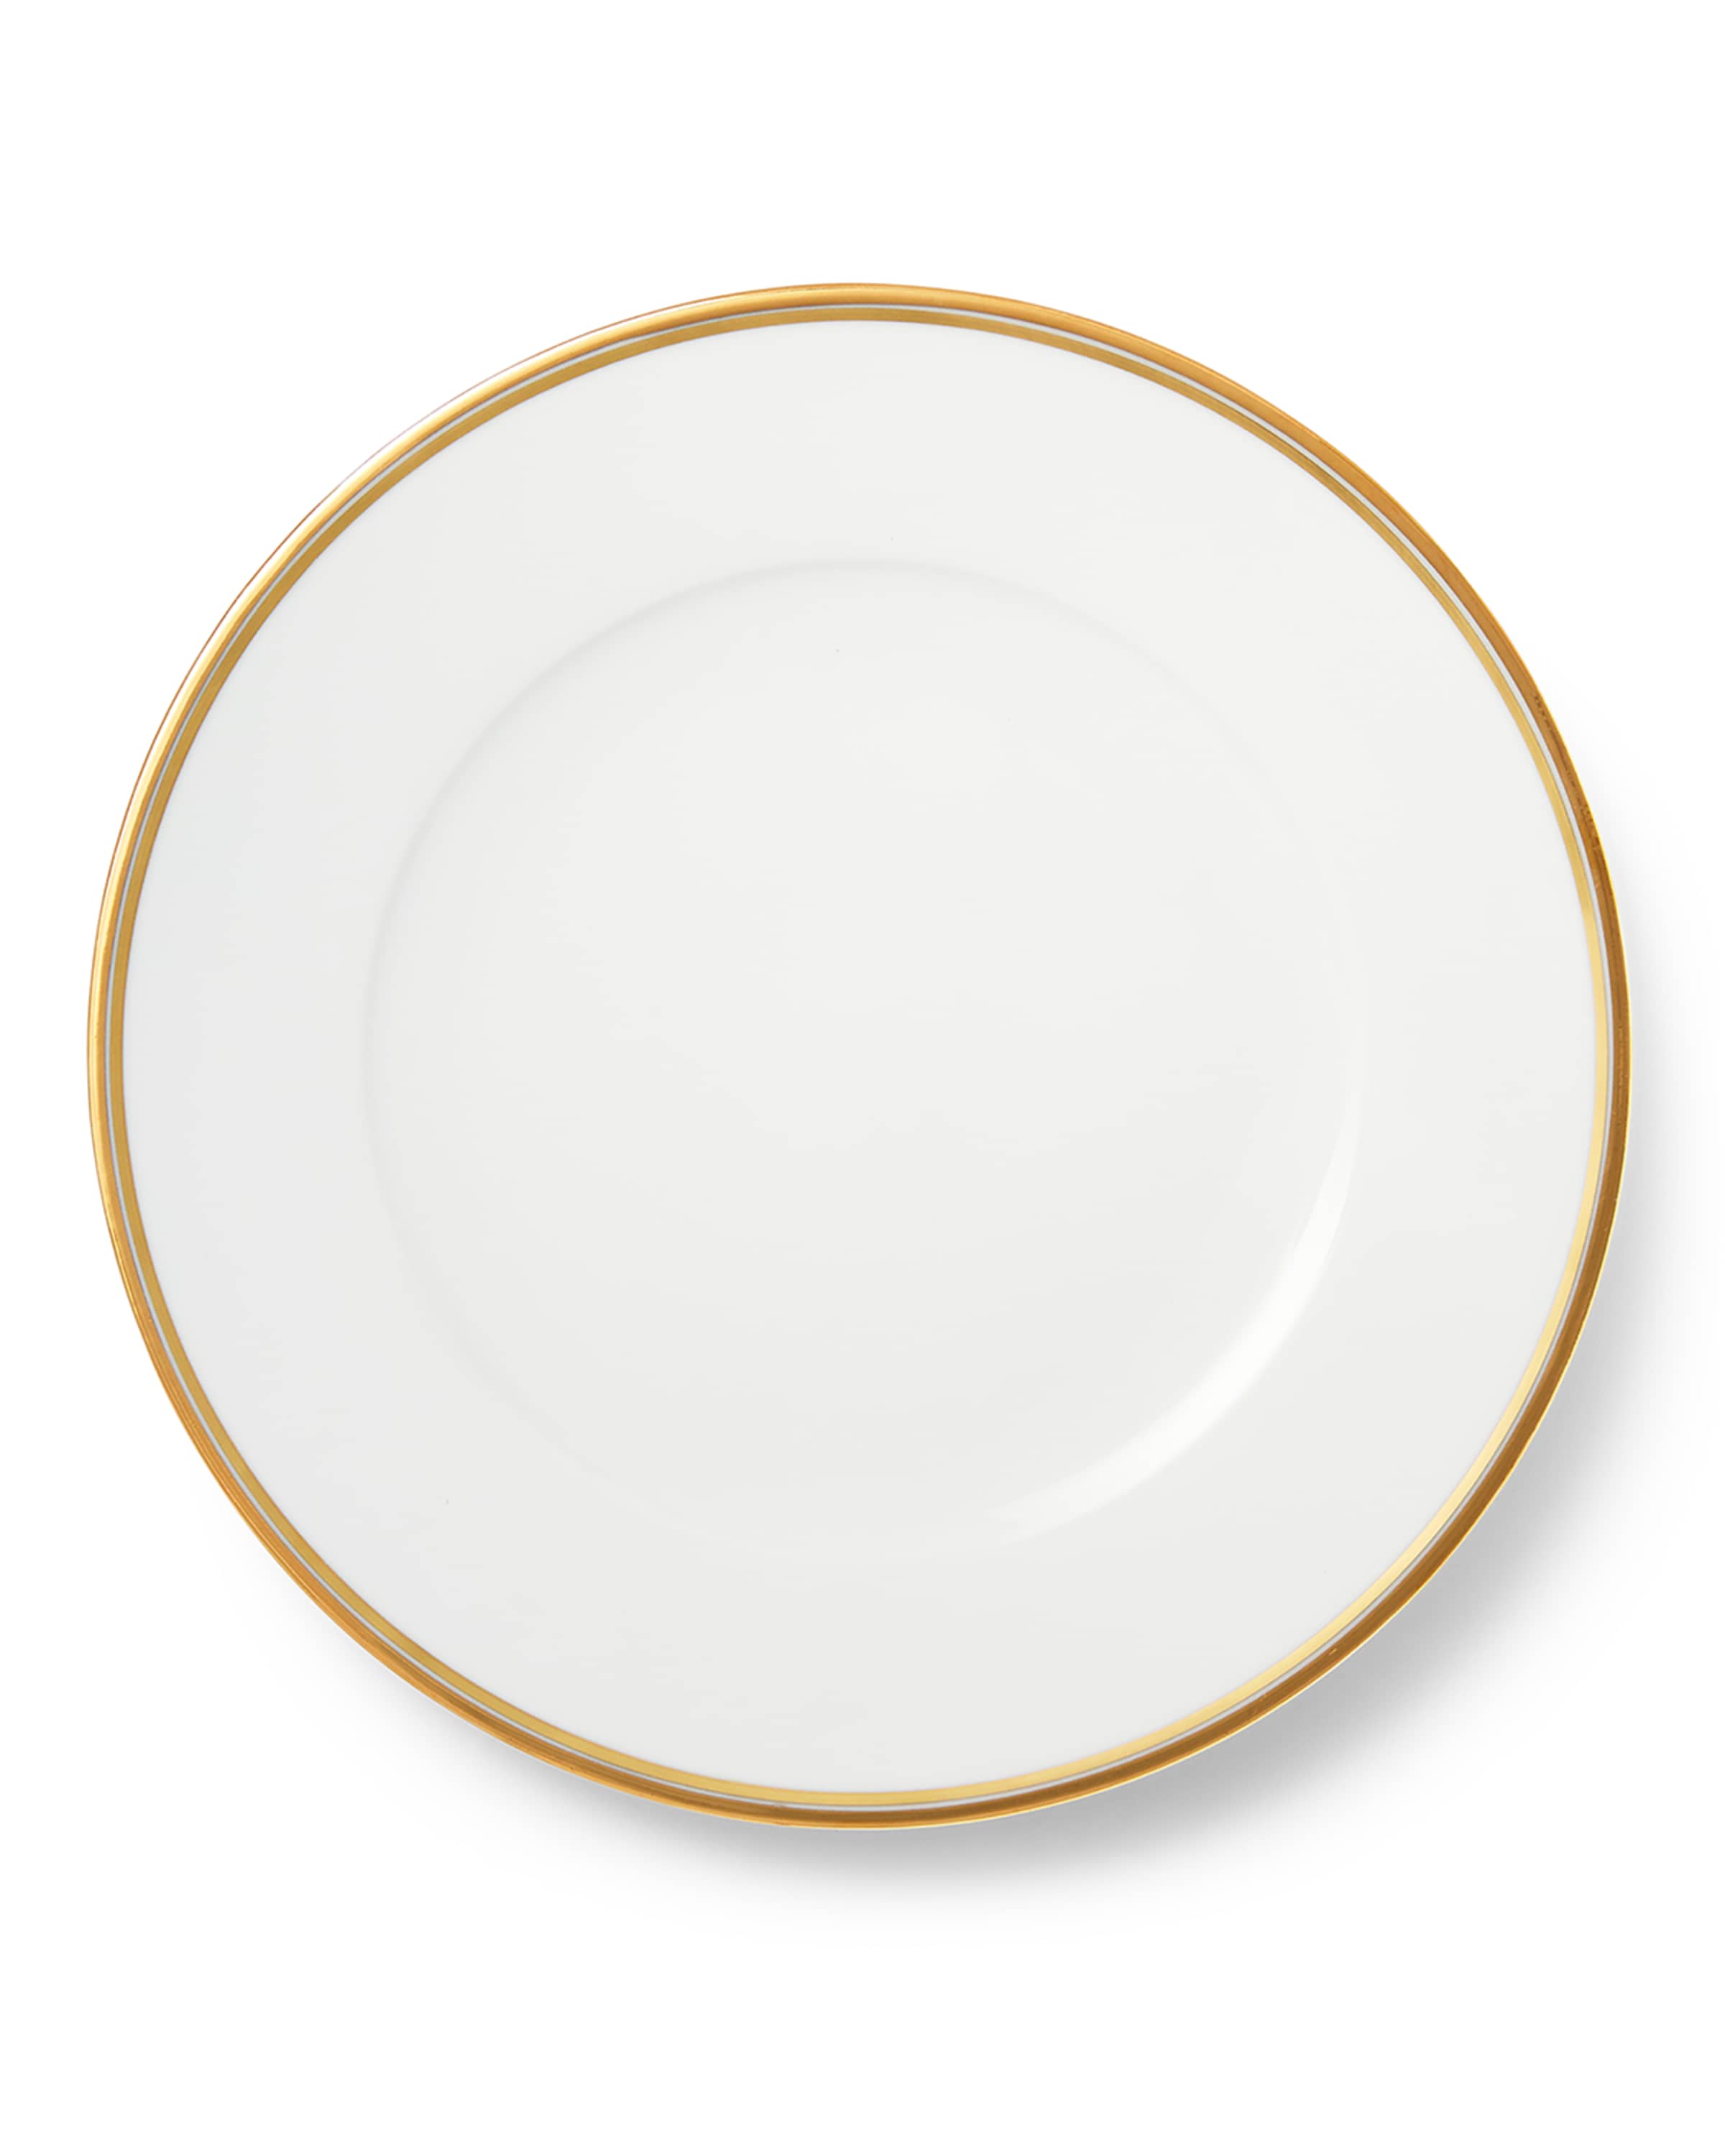 Ralph Lauren Home Wilshire Dinner Plate, Gold